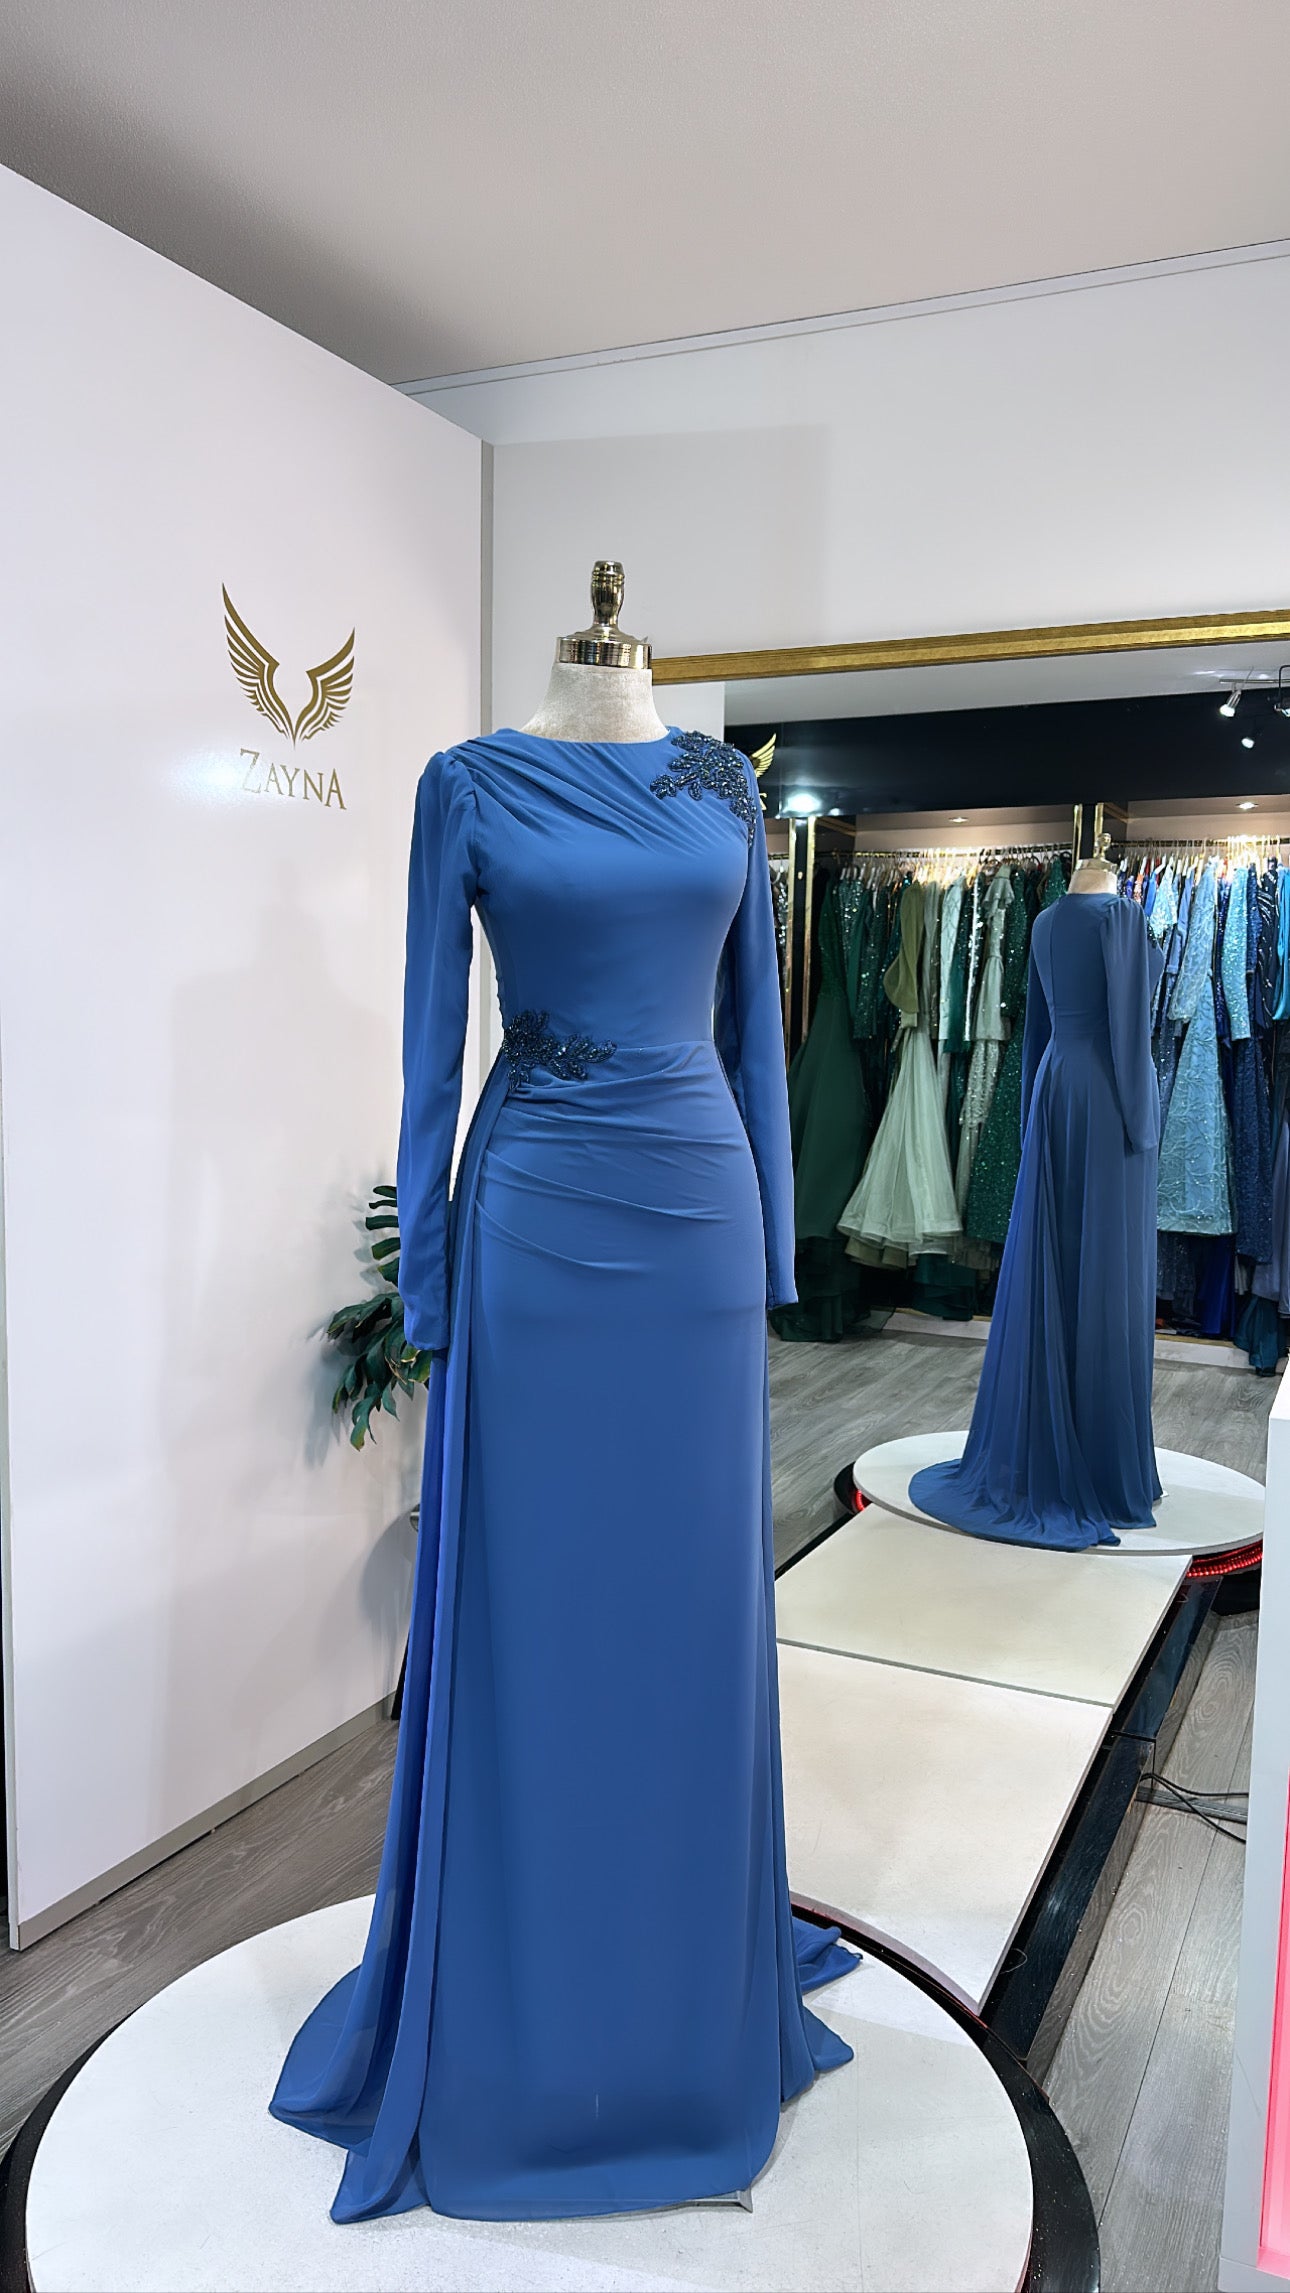 Elegant blue dress design, sleep